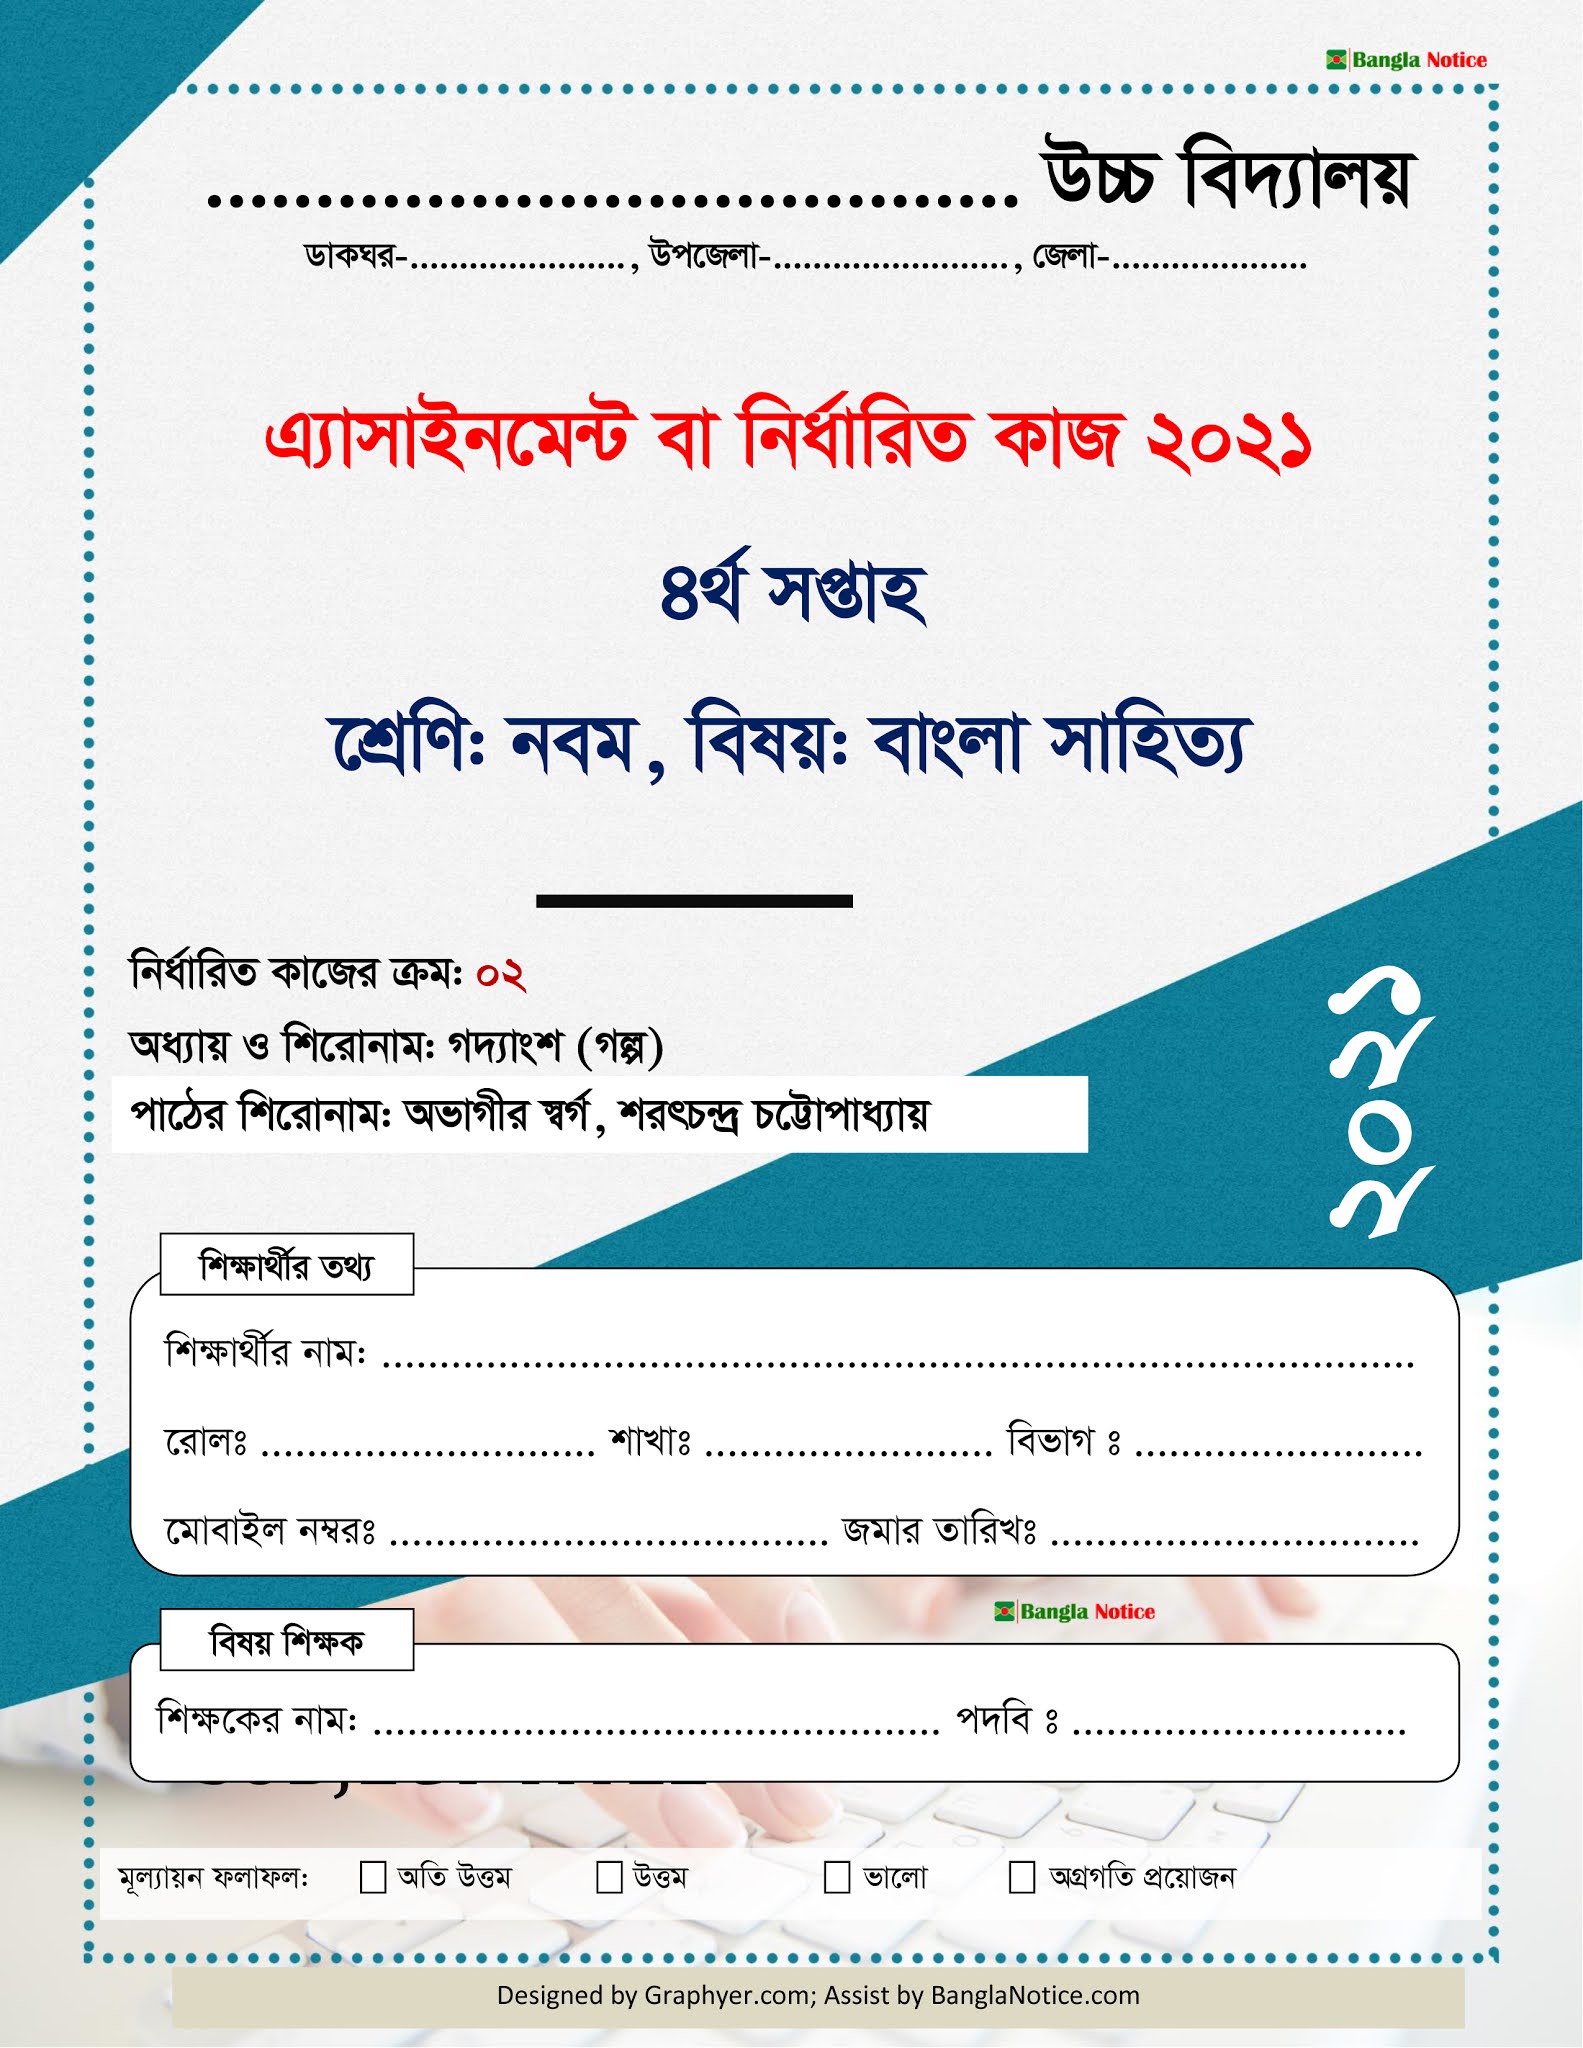 assignment of bangla